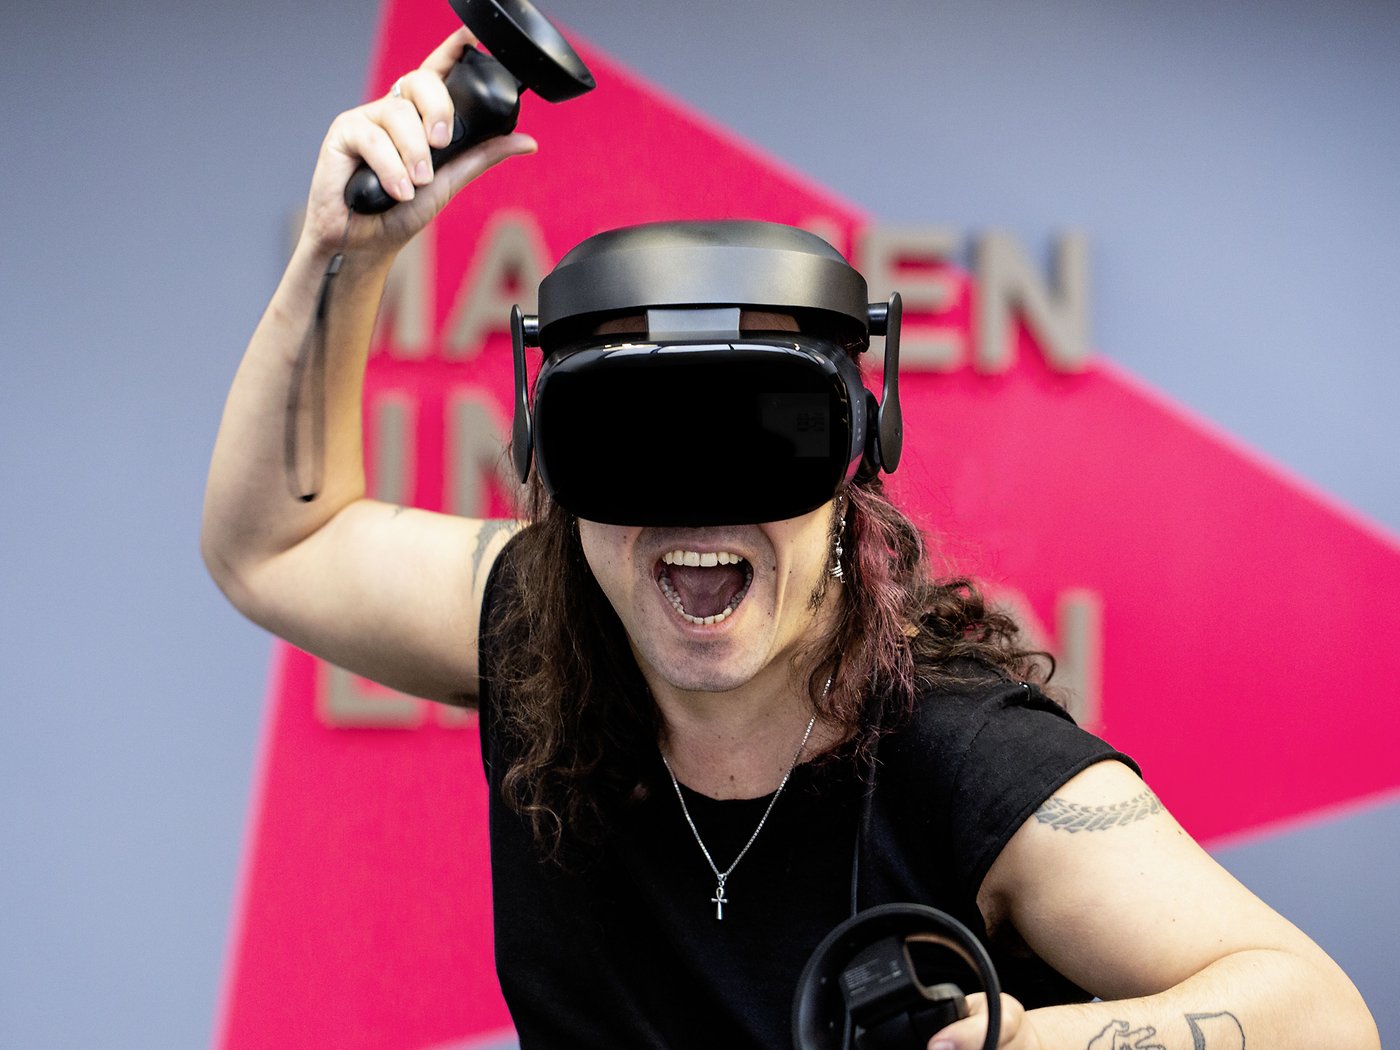 Samsung Odyssey+ insider's VR headset | NextPit